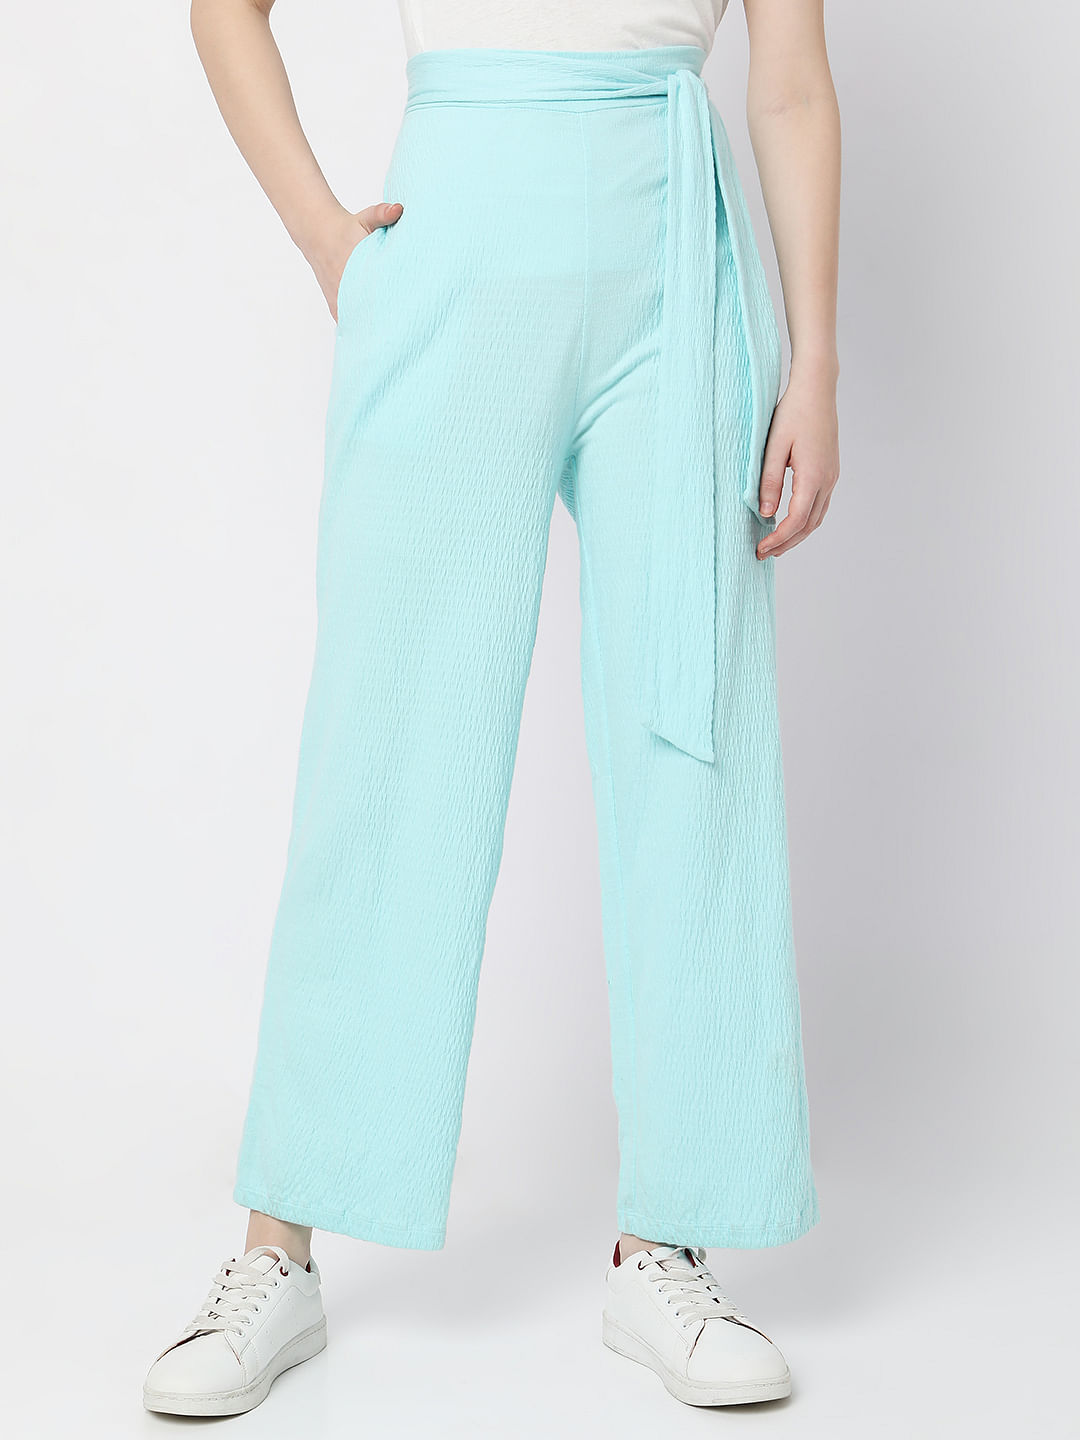 Zara Wide Leg Trousers With Darts Blue 2731/043 | eBay